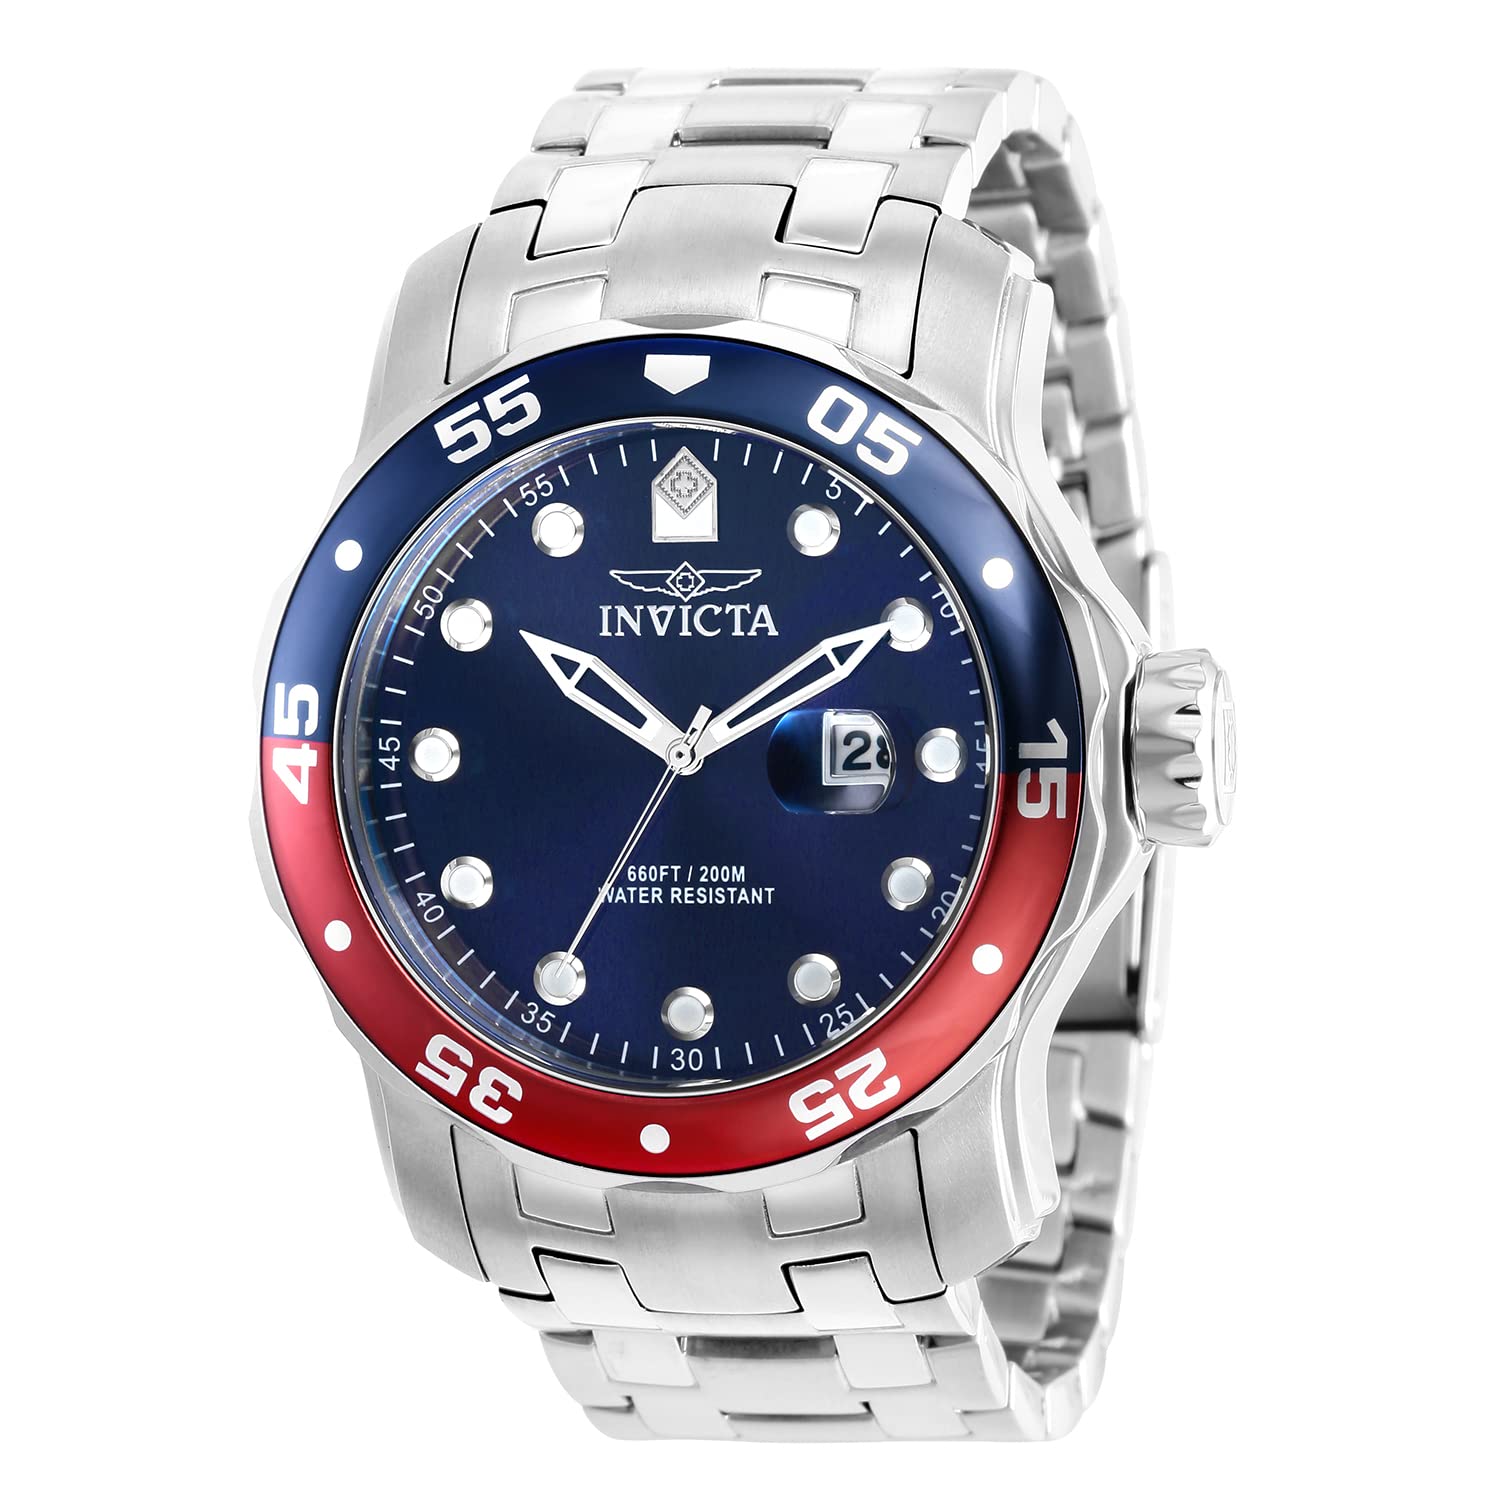 Invicta Men's Pro Diver 39090 Quartz Watch